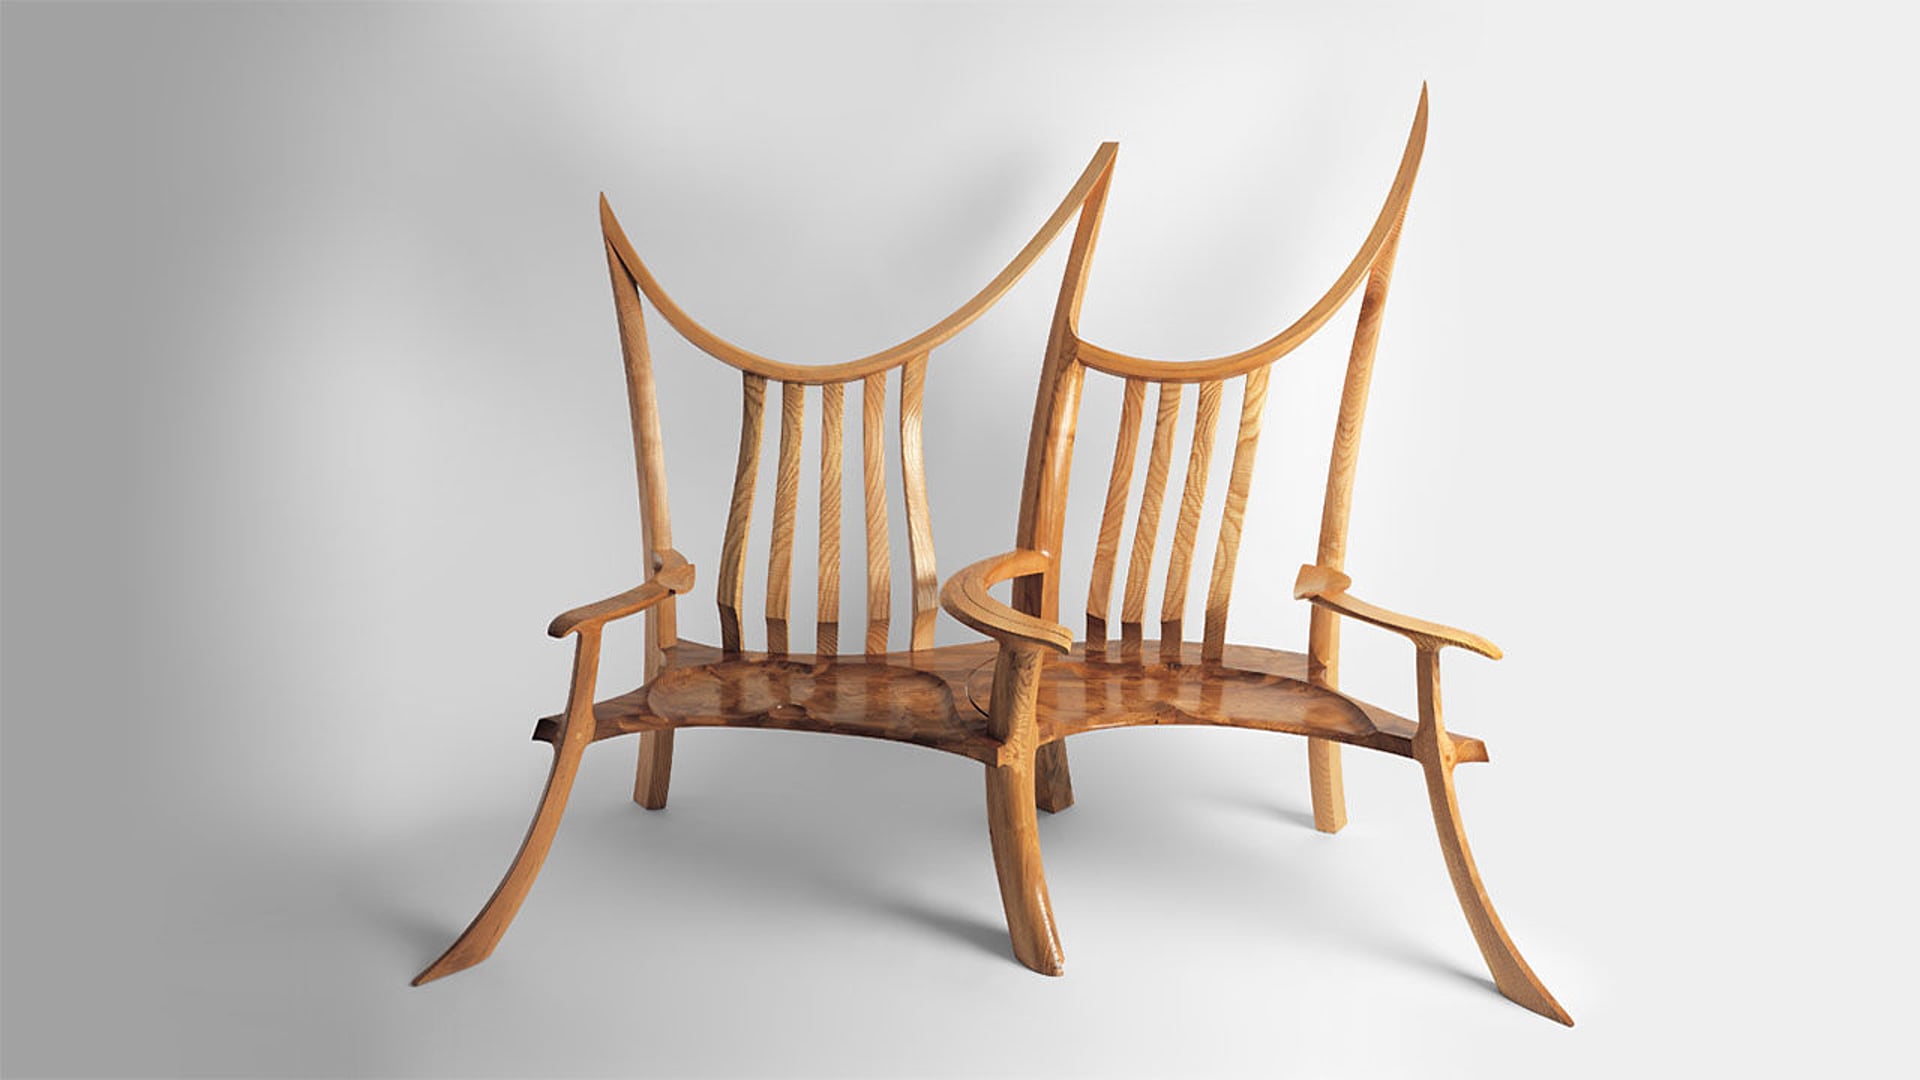 David Savage – on Design and Fine Furniture Making